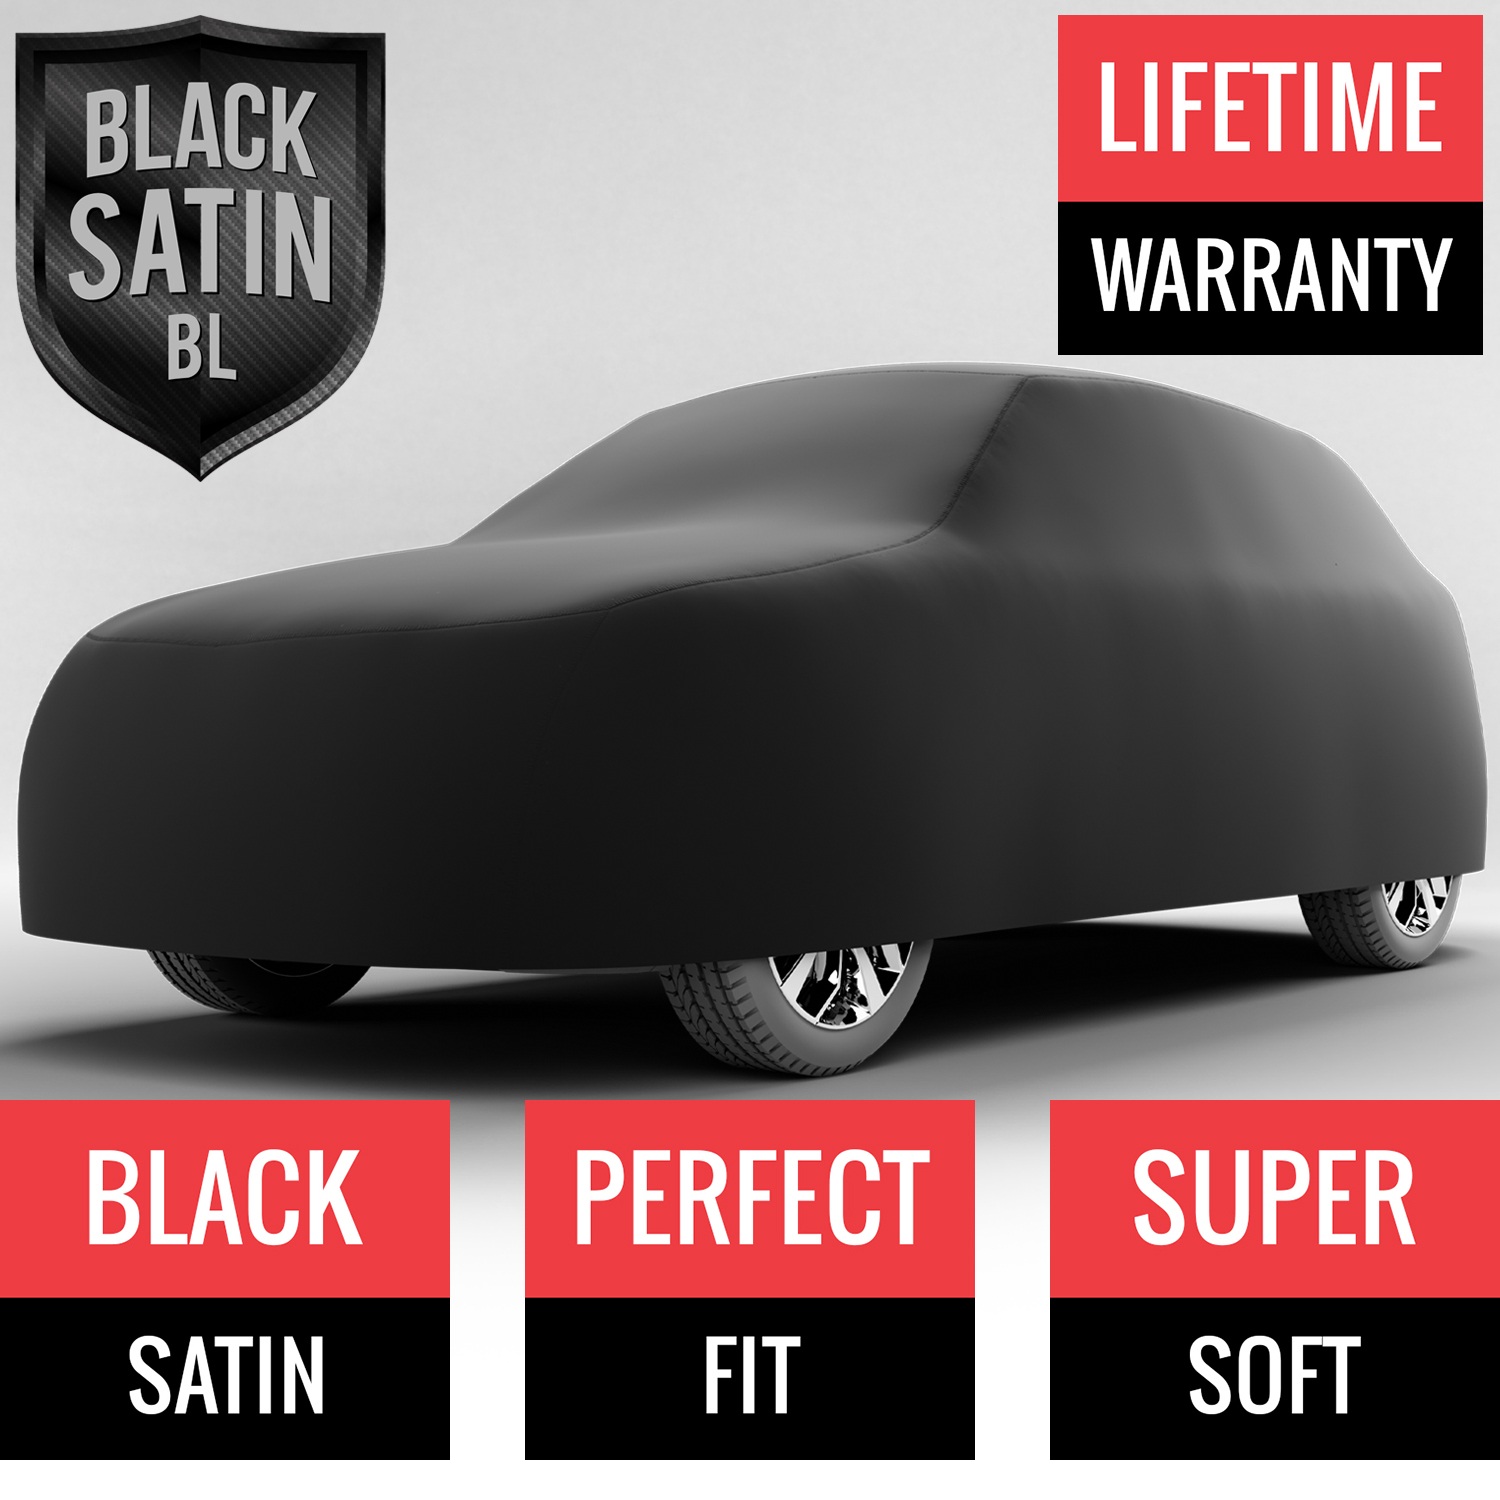 Black Satin BL - Black Car Cover for Plymouth Voyager 1993 Van